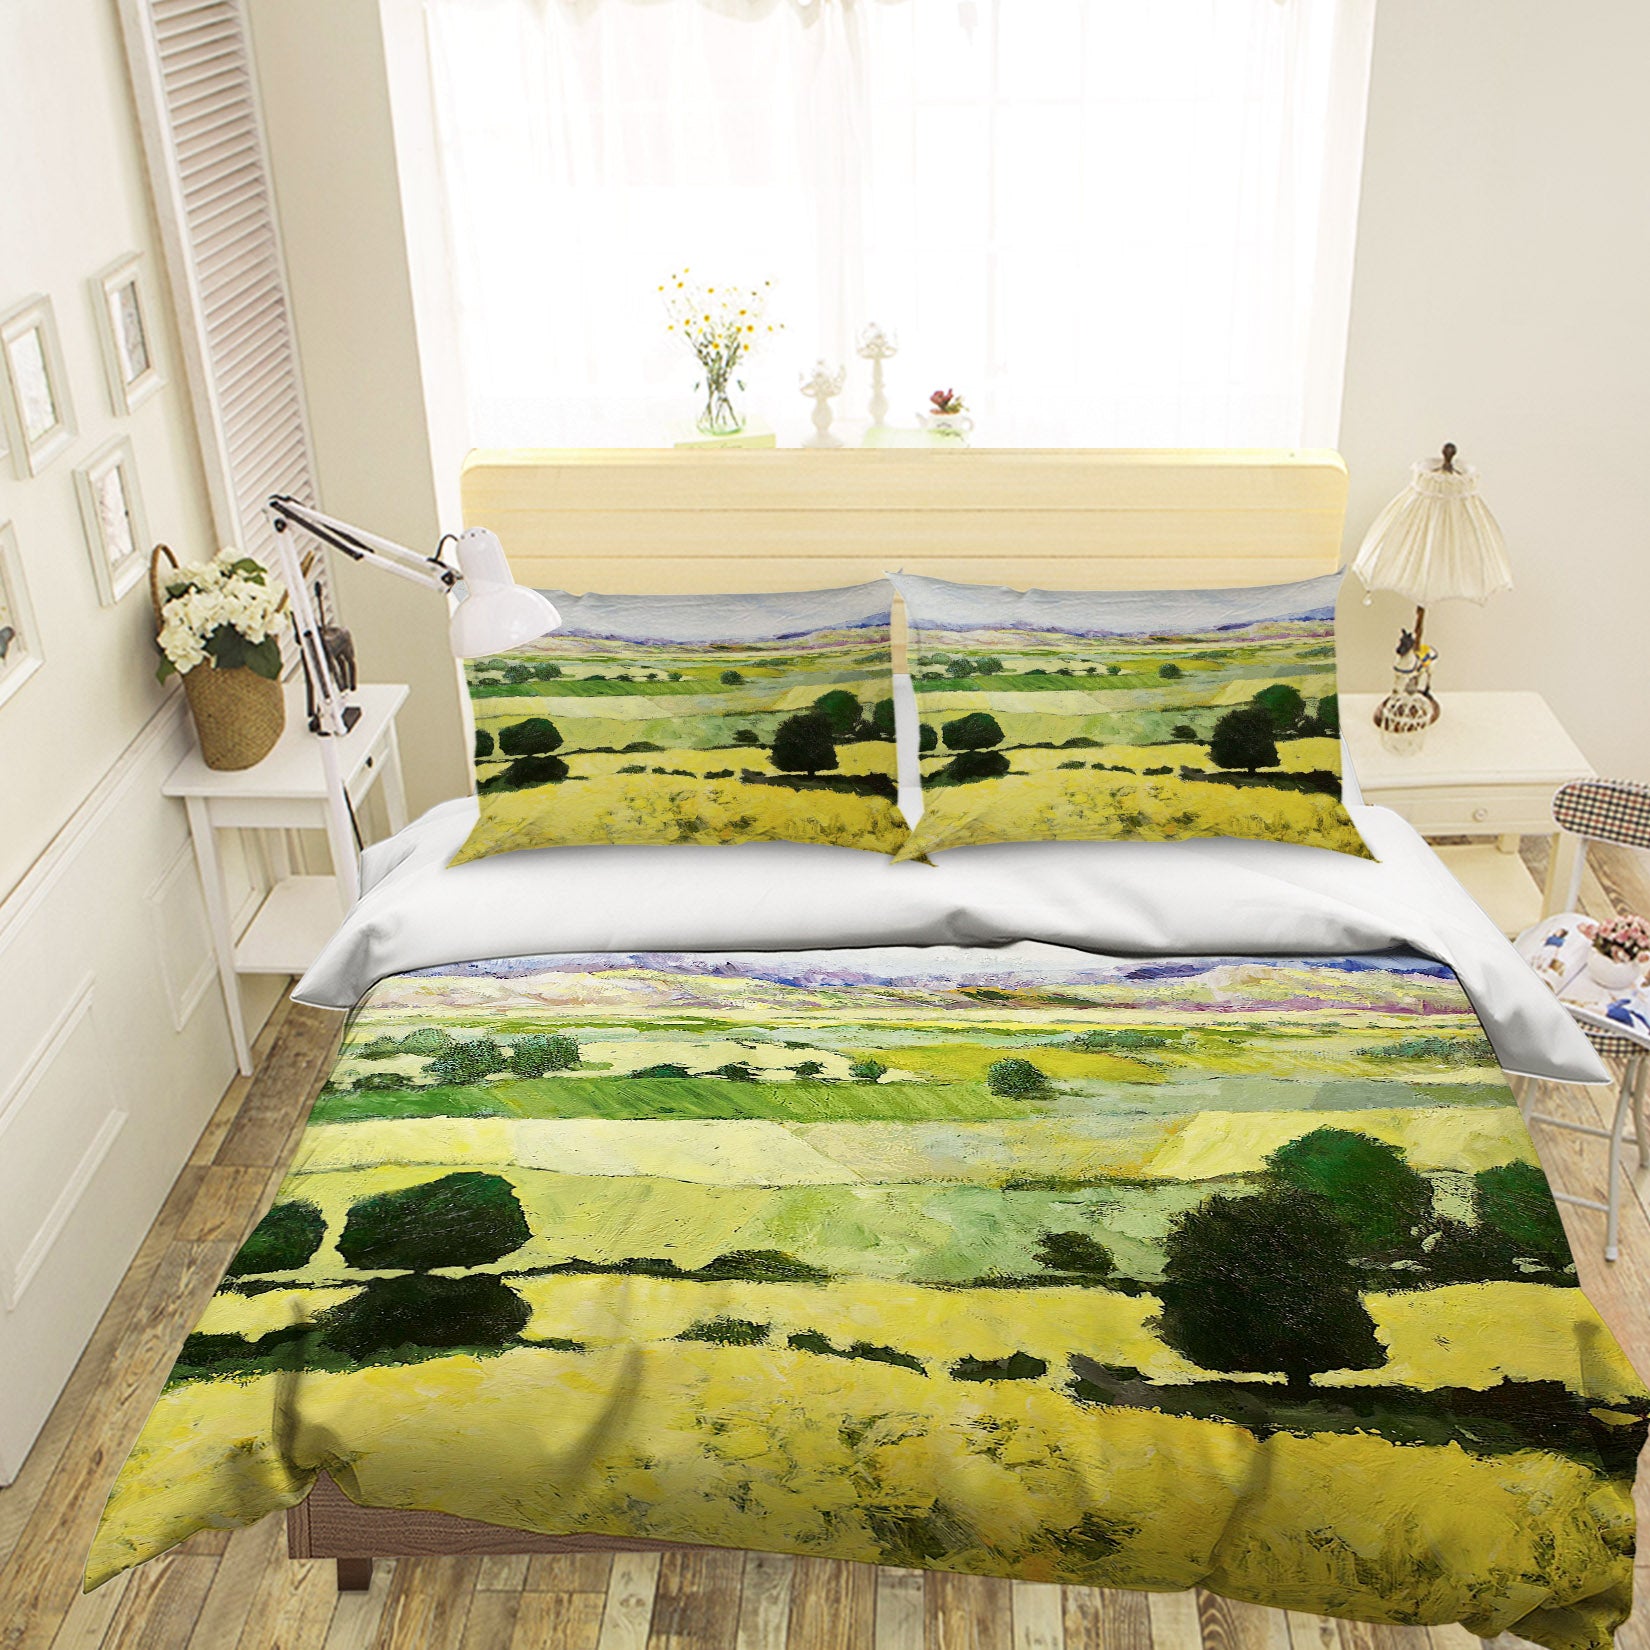 3D Napa Yellow 2110 Allan P. Friedlander Bedding Bed Pillowcases Quilt